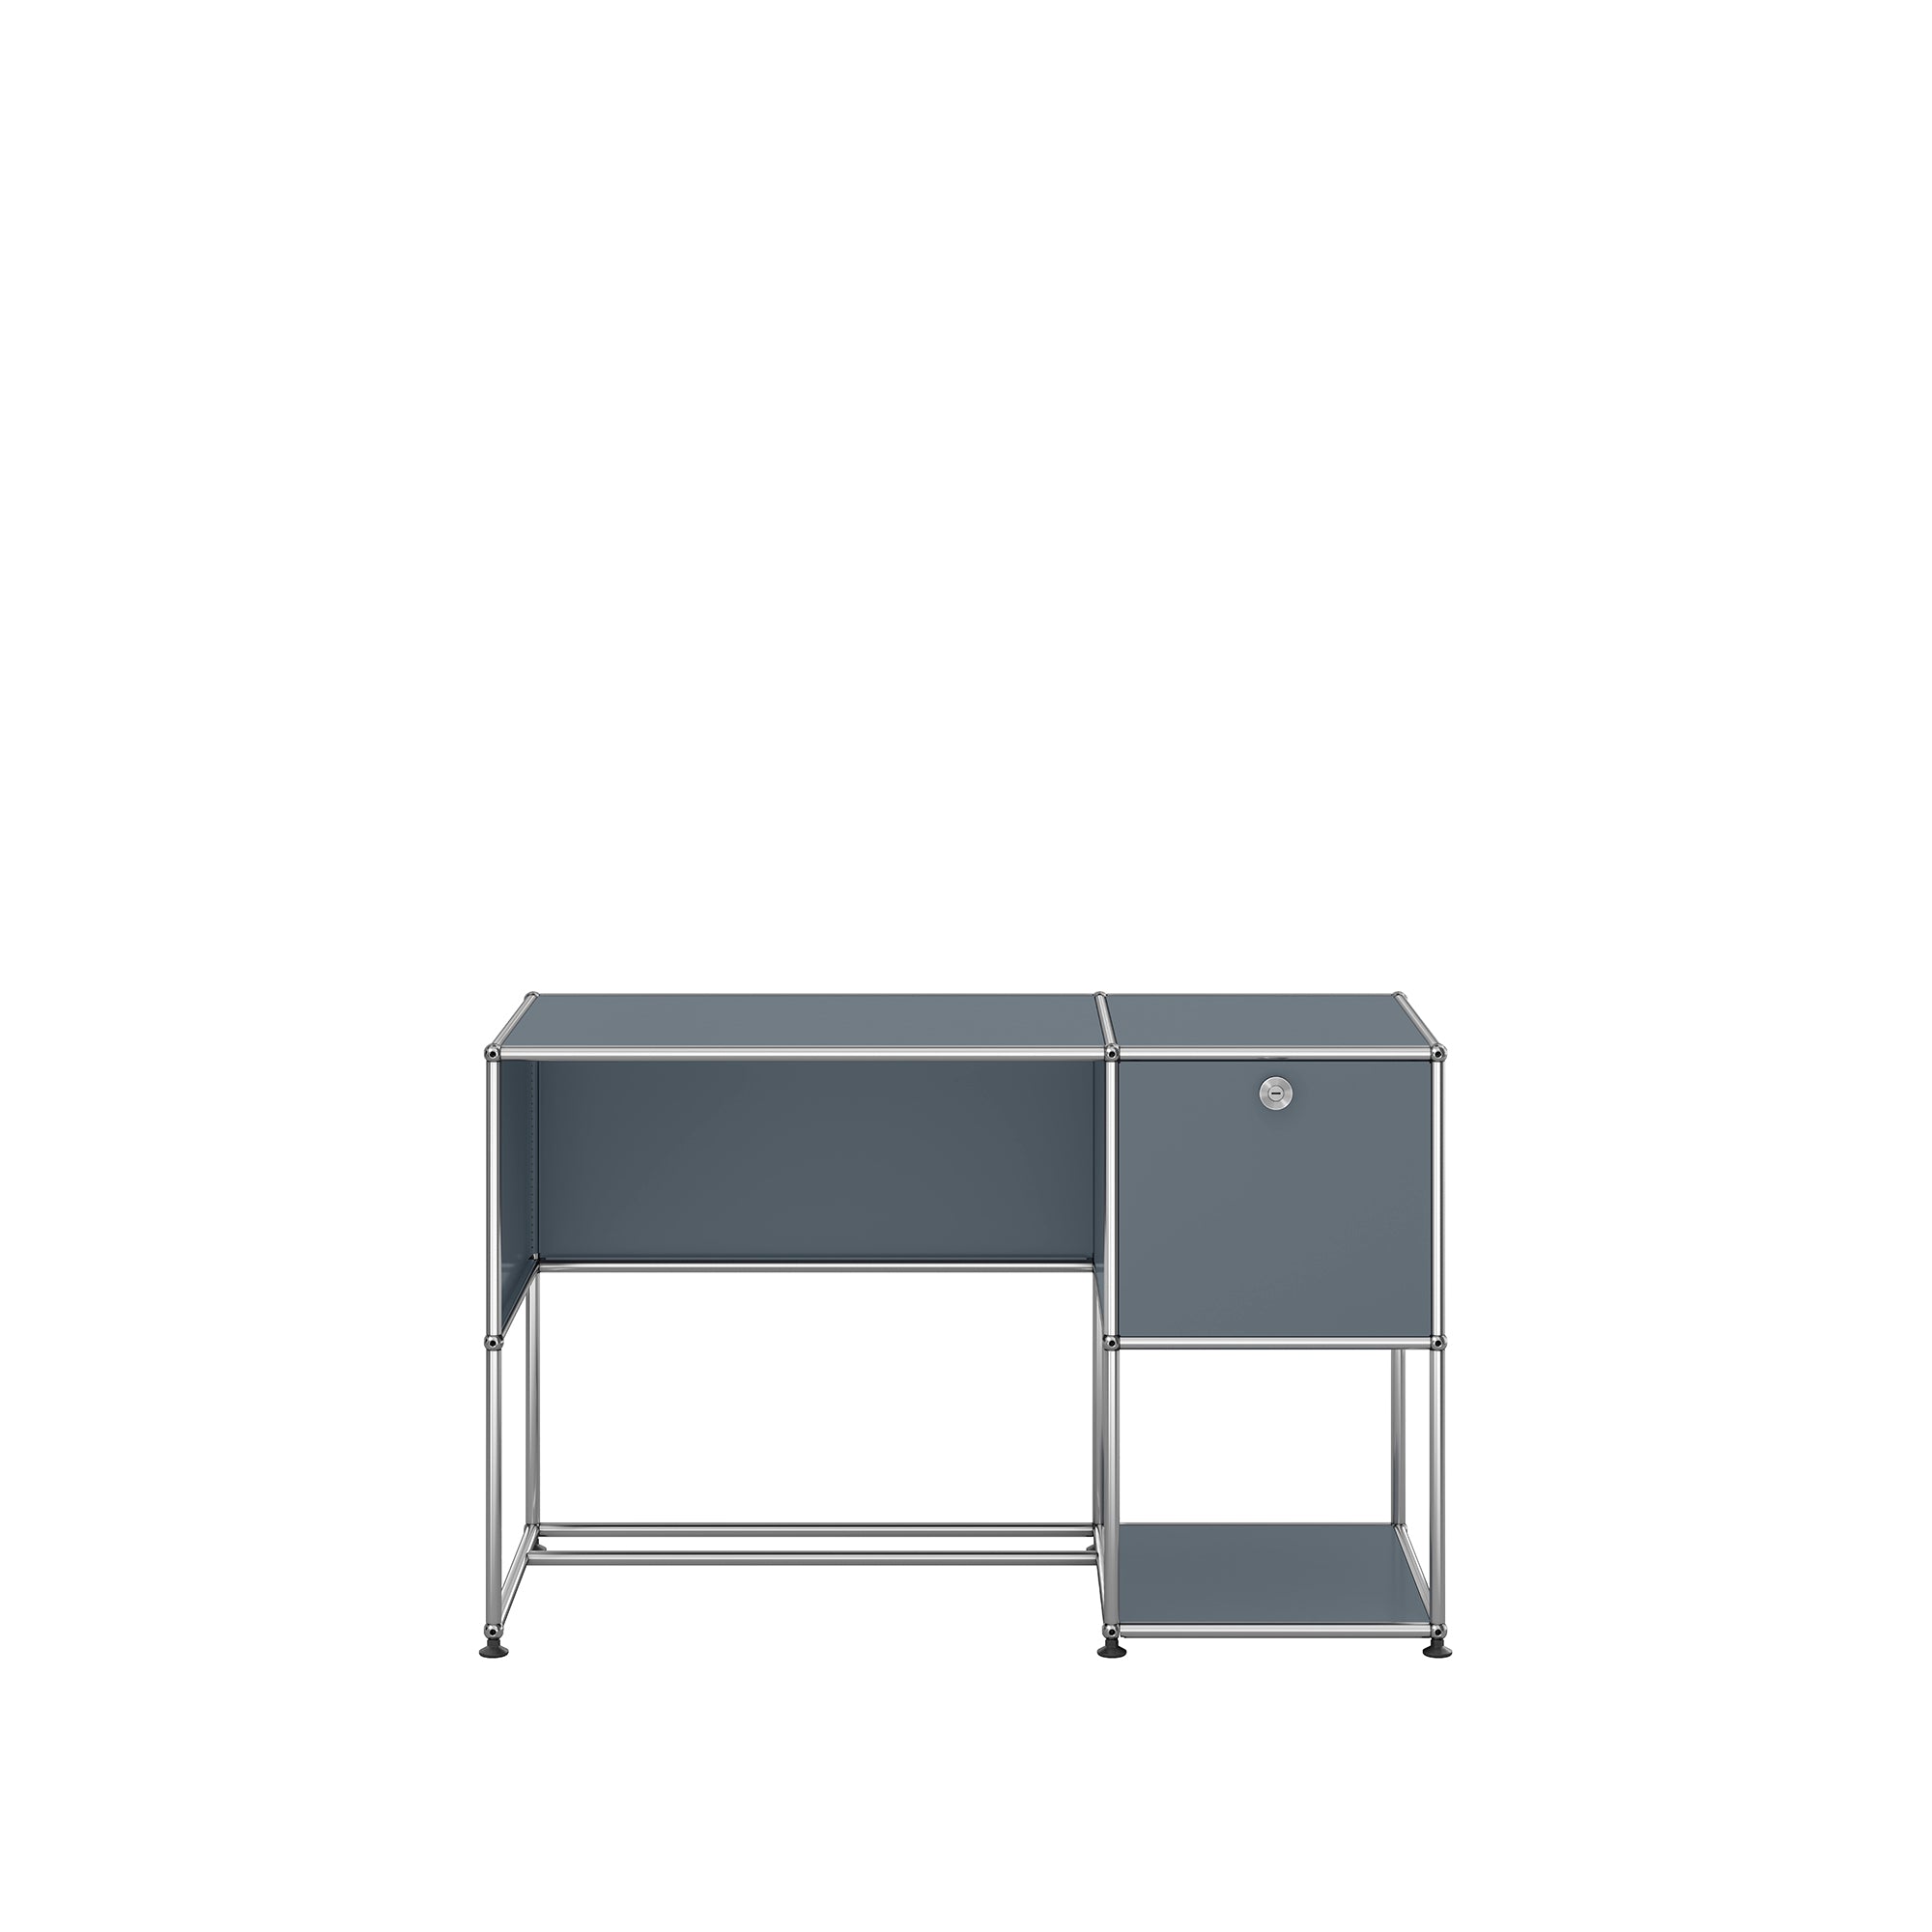 Haller cabinet modular config. 8